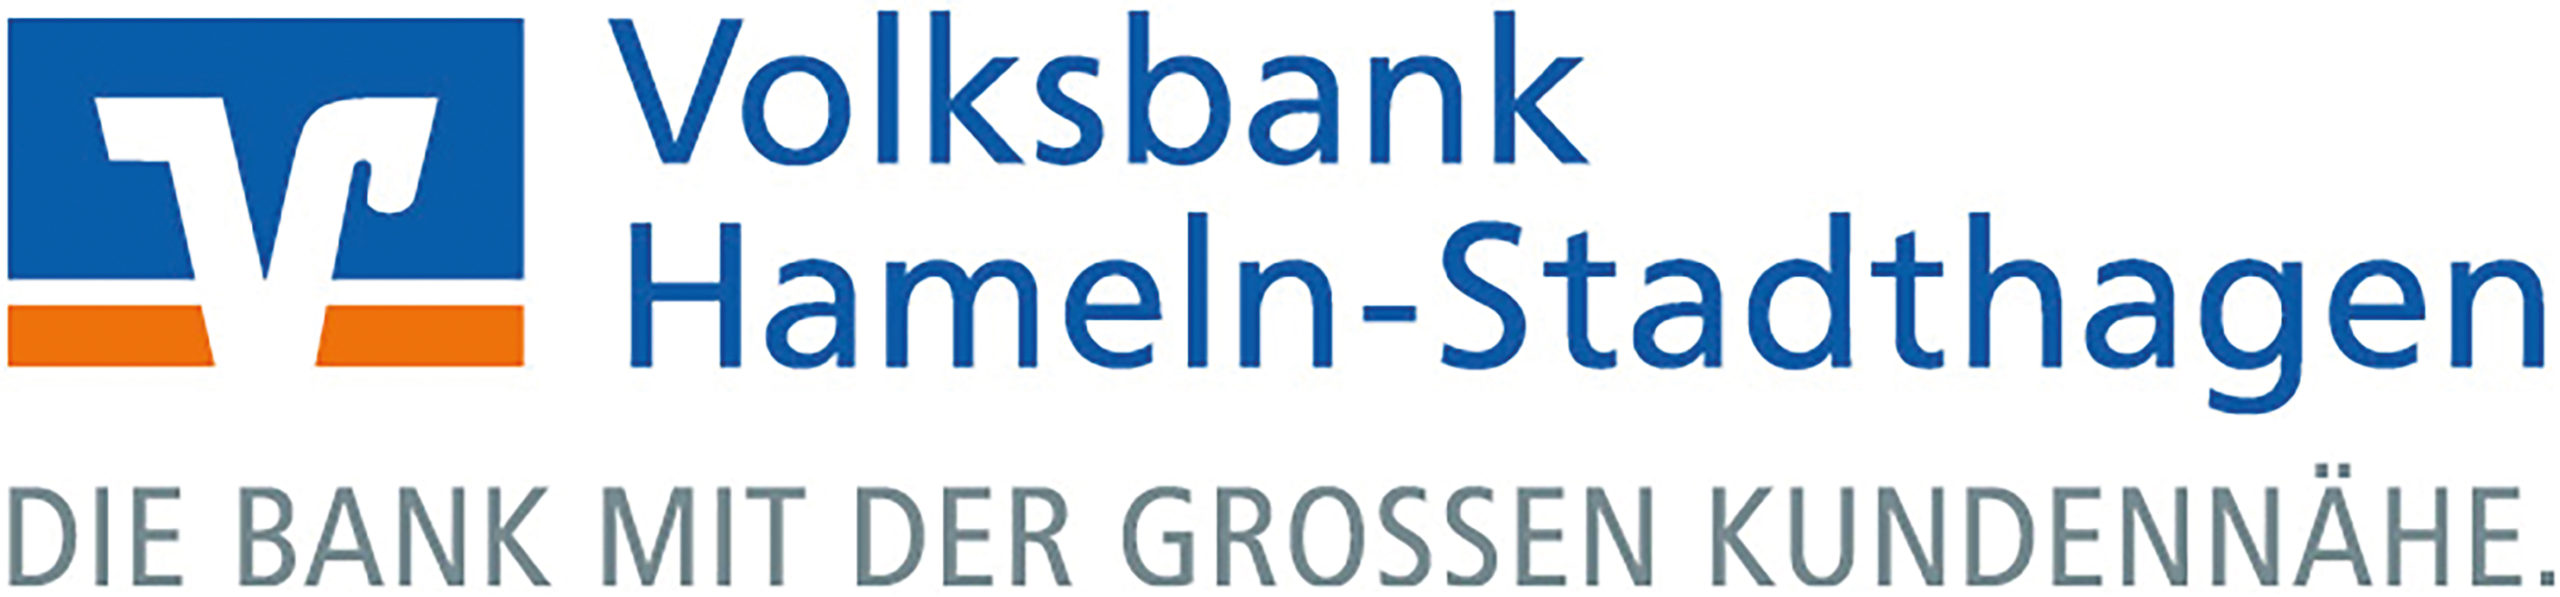 Volksbank Logo 02